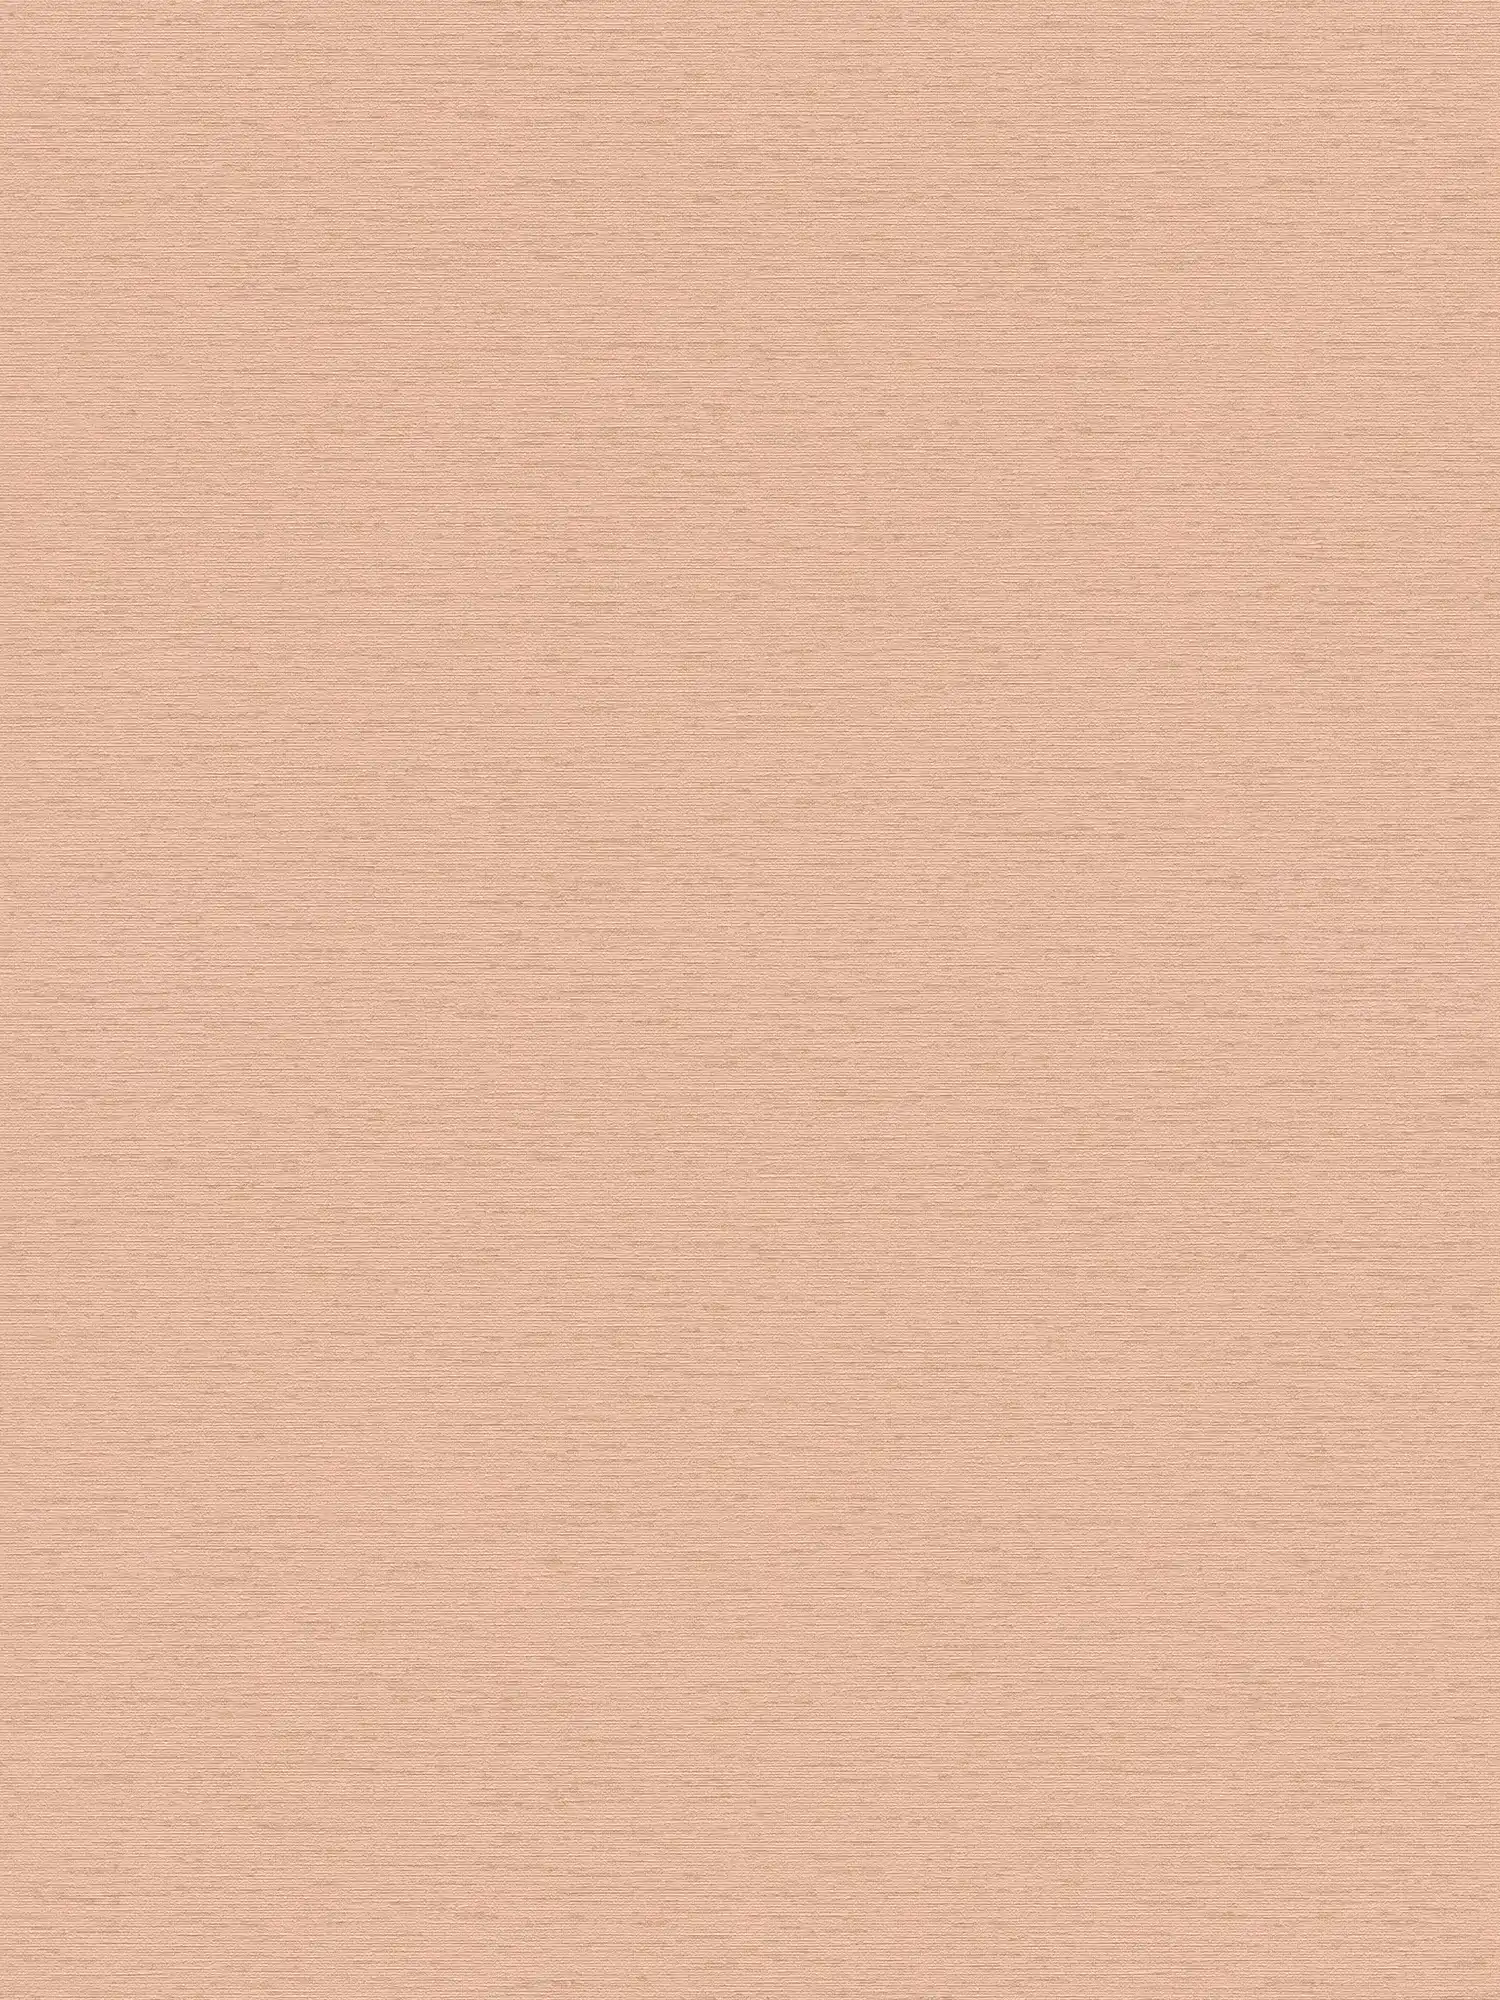 Wallpaper plain with textile structure, matt - pink
